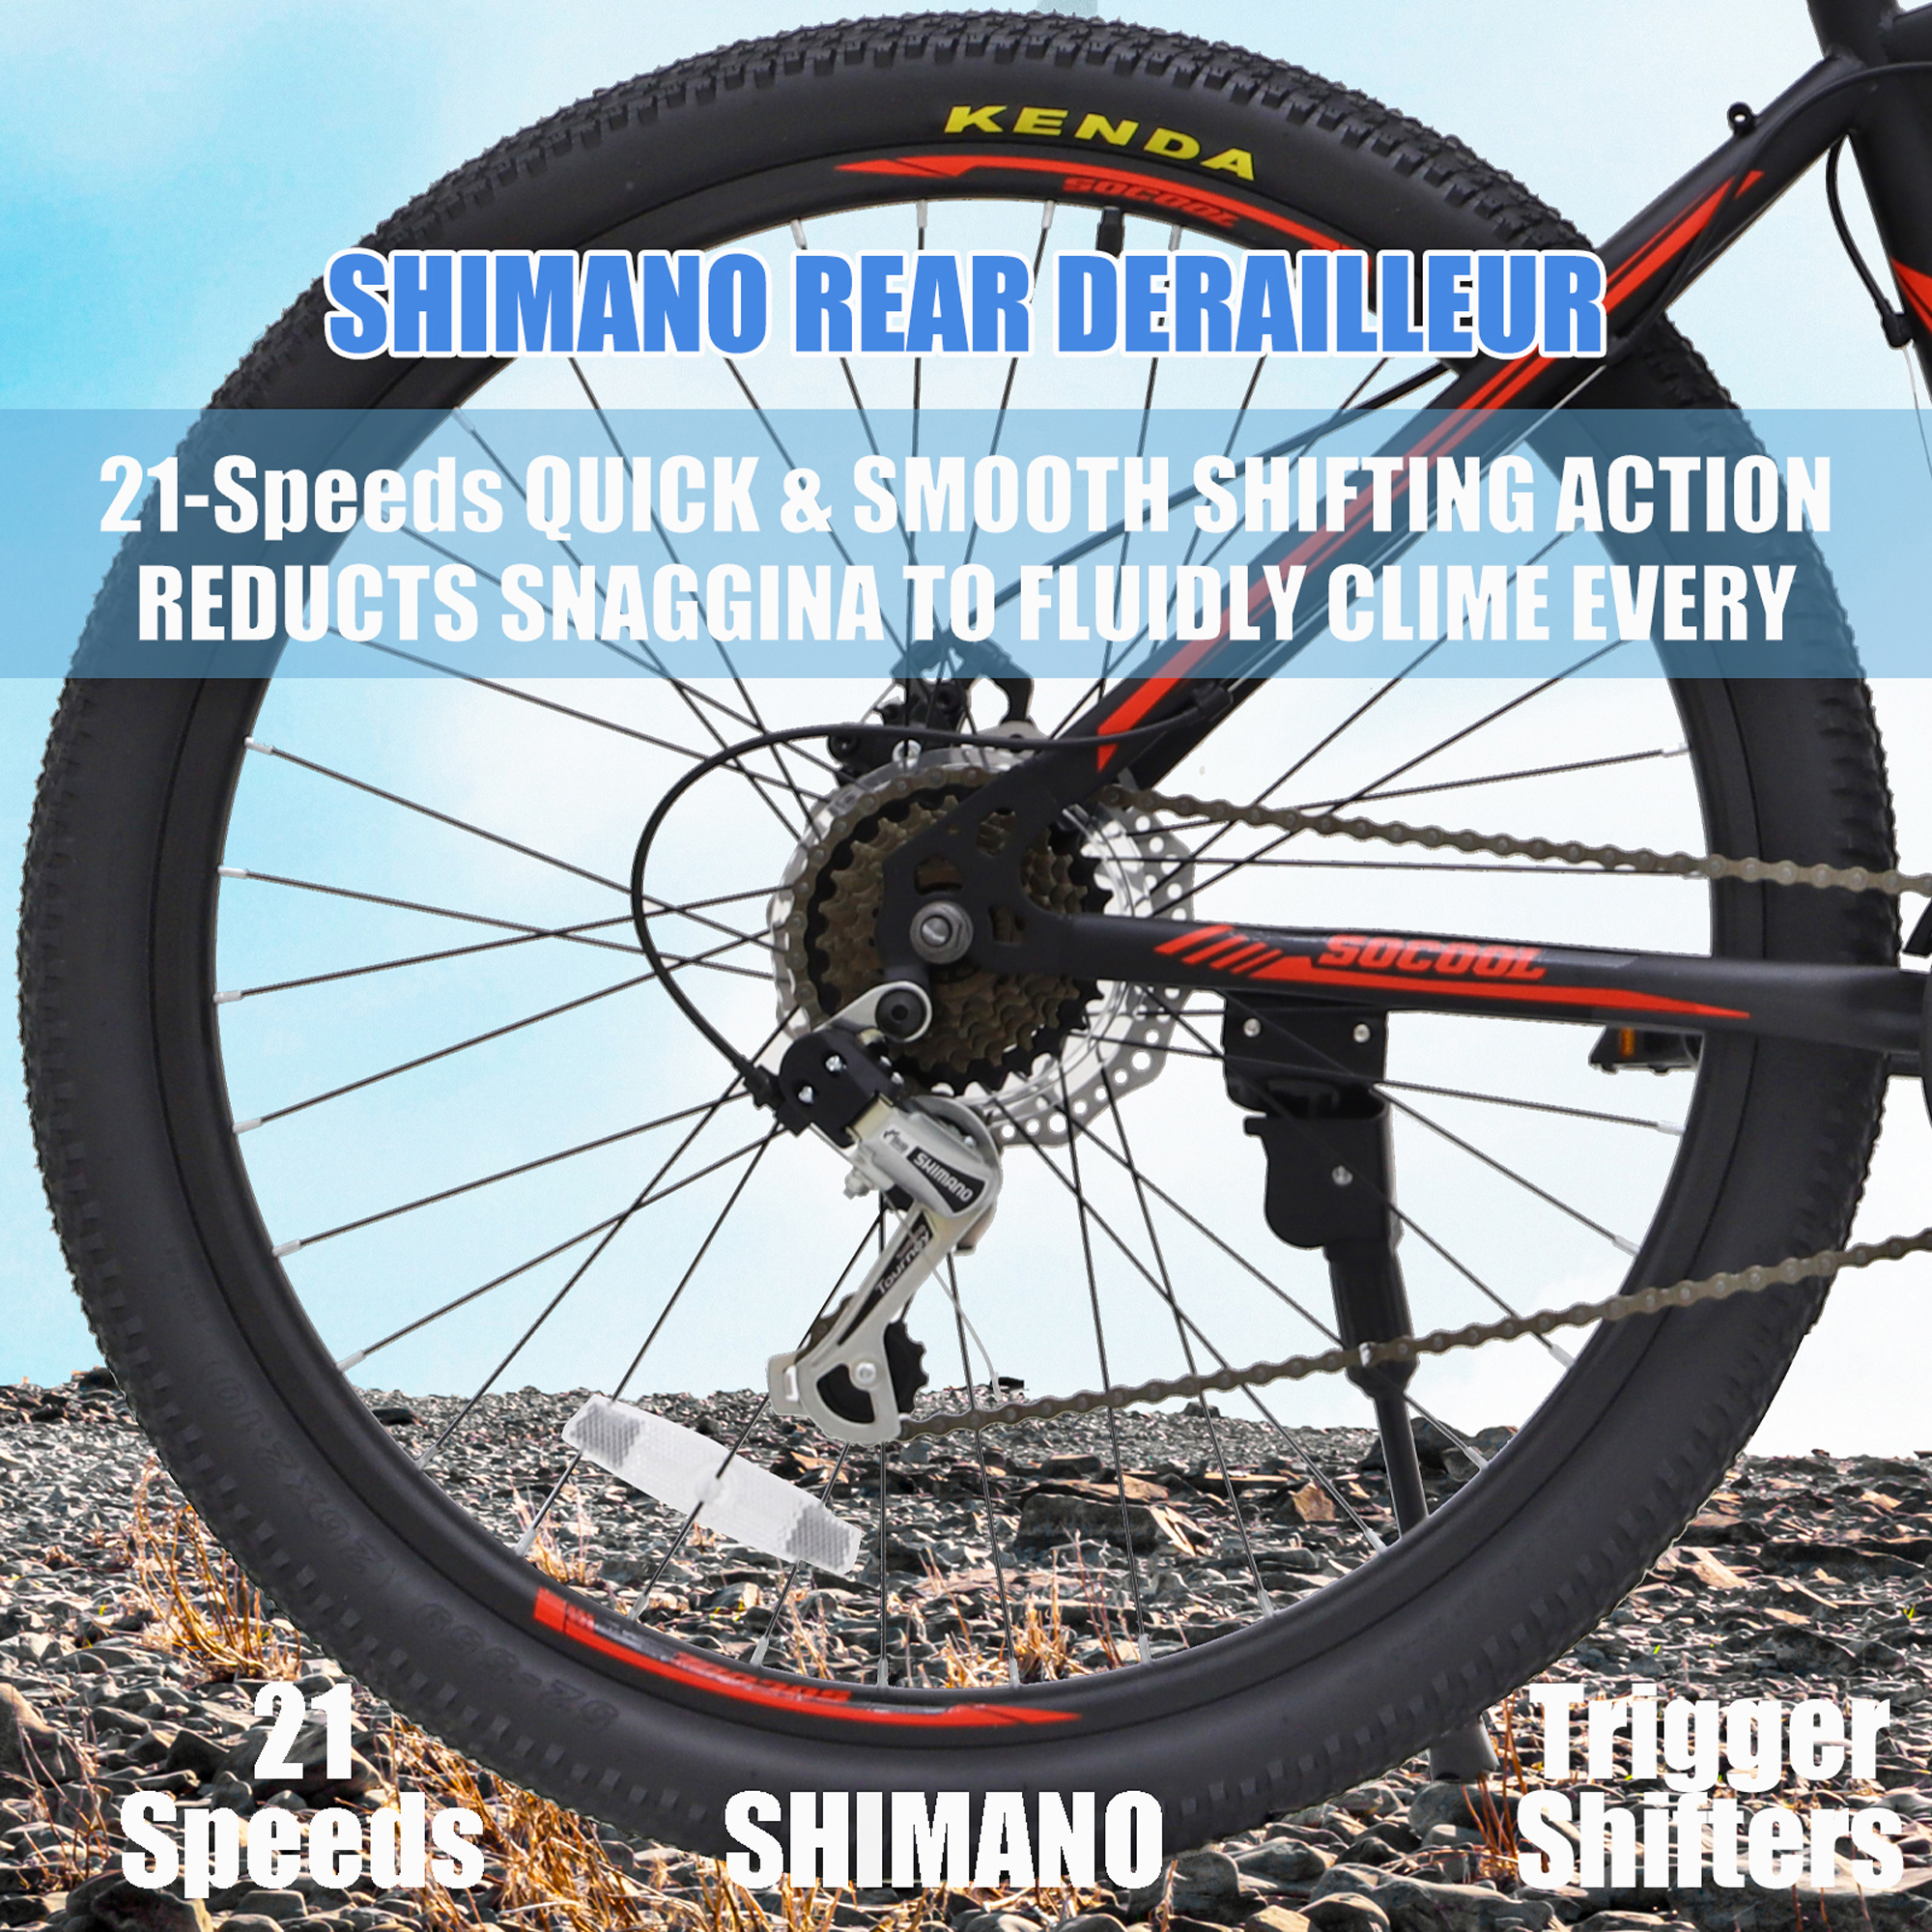 SOCOOL 26" Road Bike, Shimano 21 Speeds, Light Weight Aluminum Frame, Mountain Bike for Men -Black & Red, ZA922BK - image 4 of 9